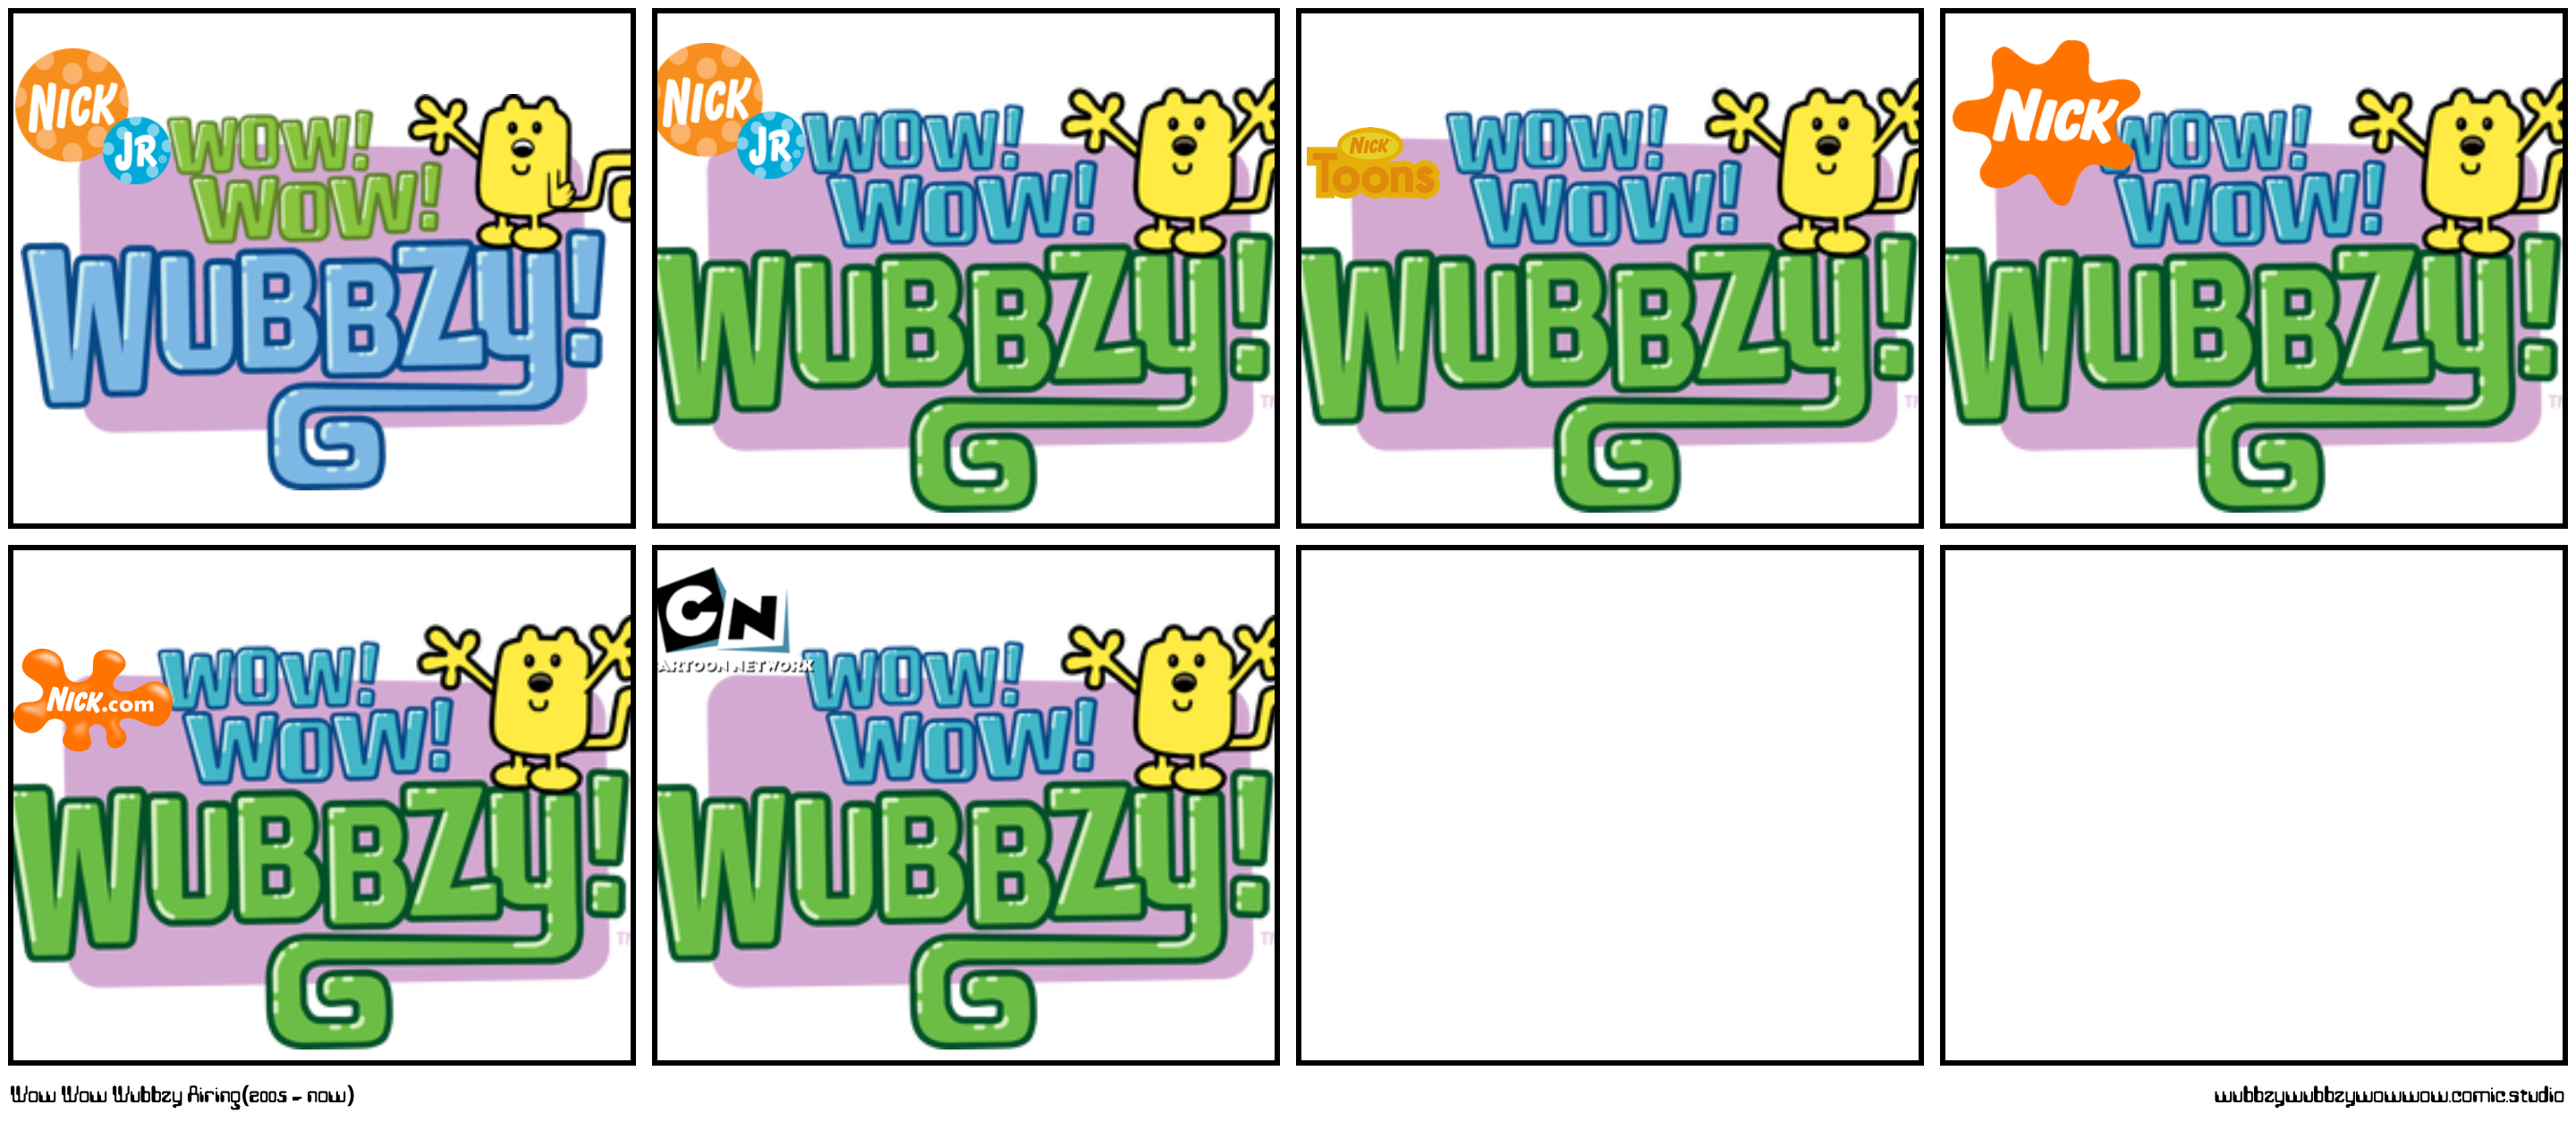 Wow Wow Wubbzy Airing(2005 - now)